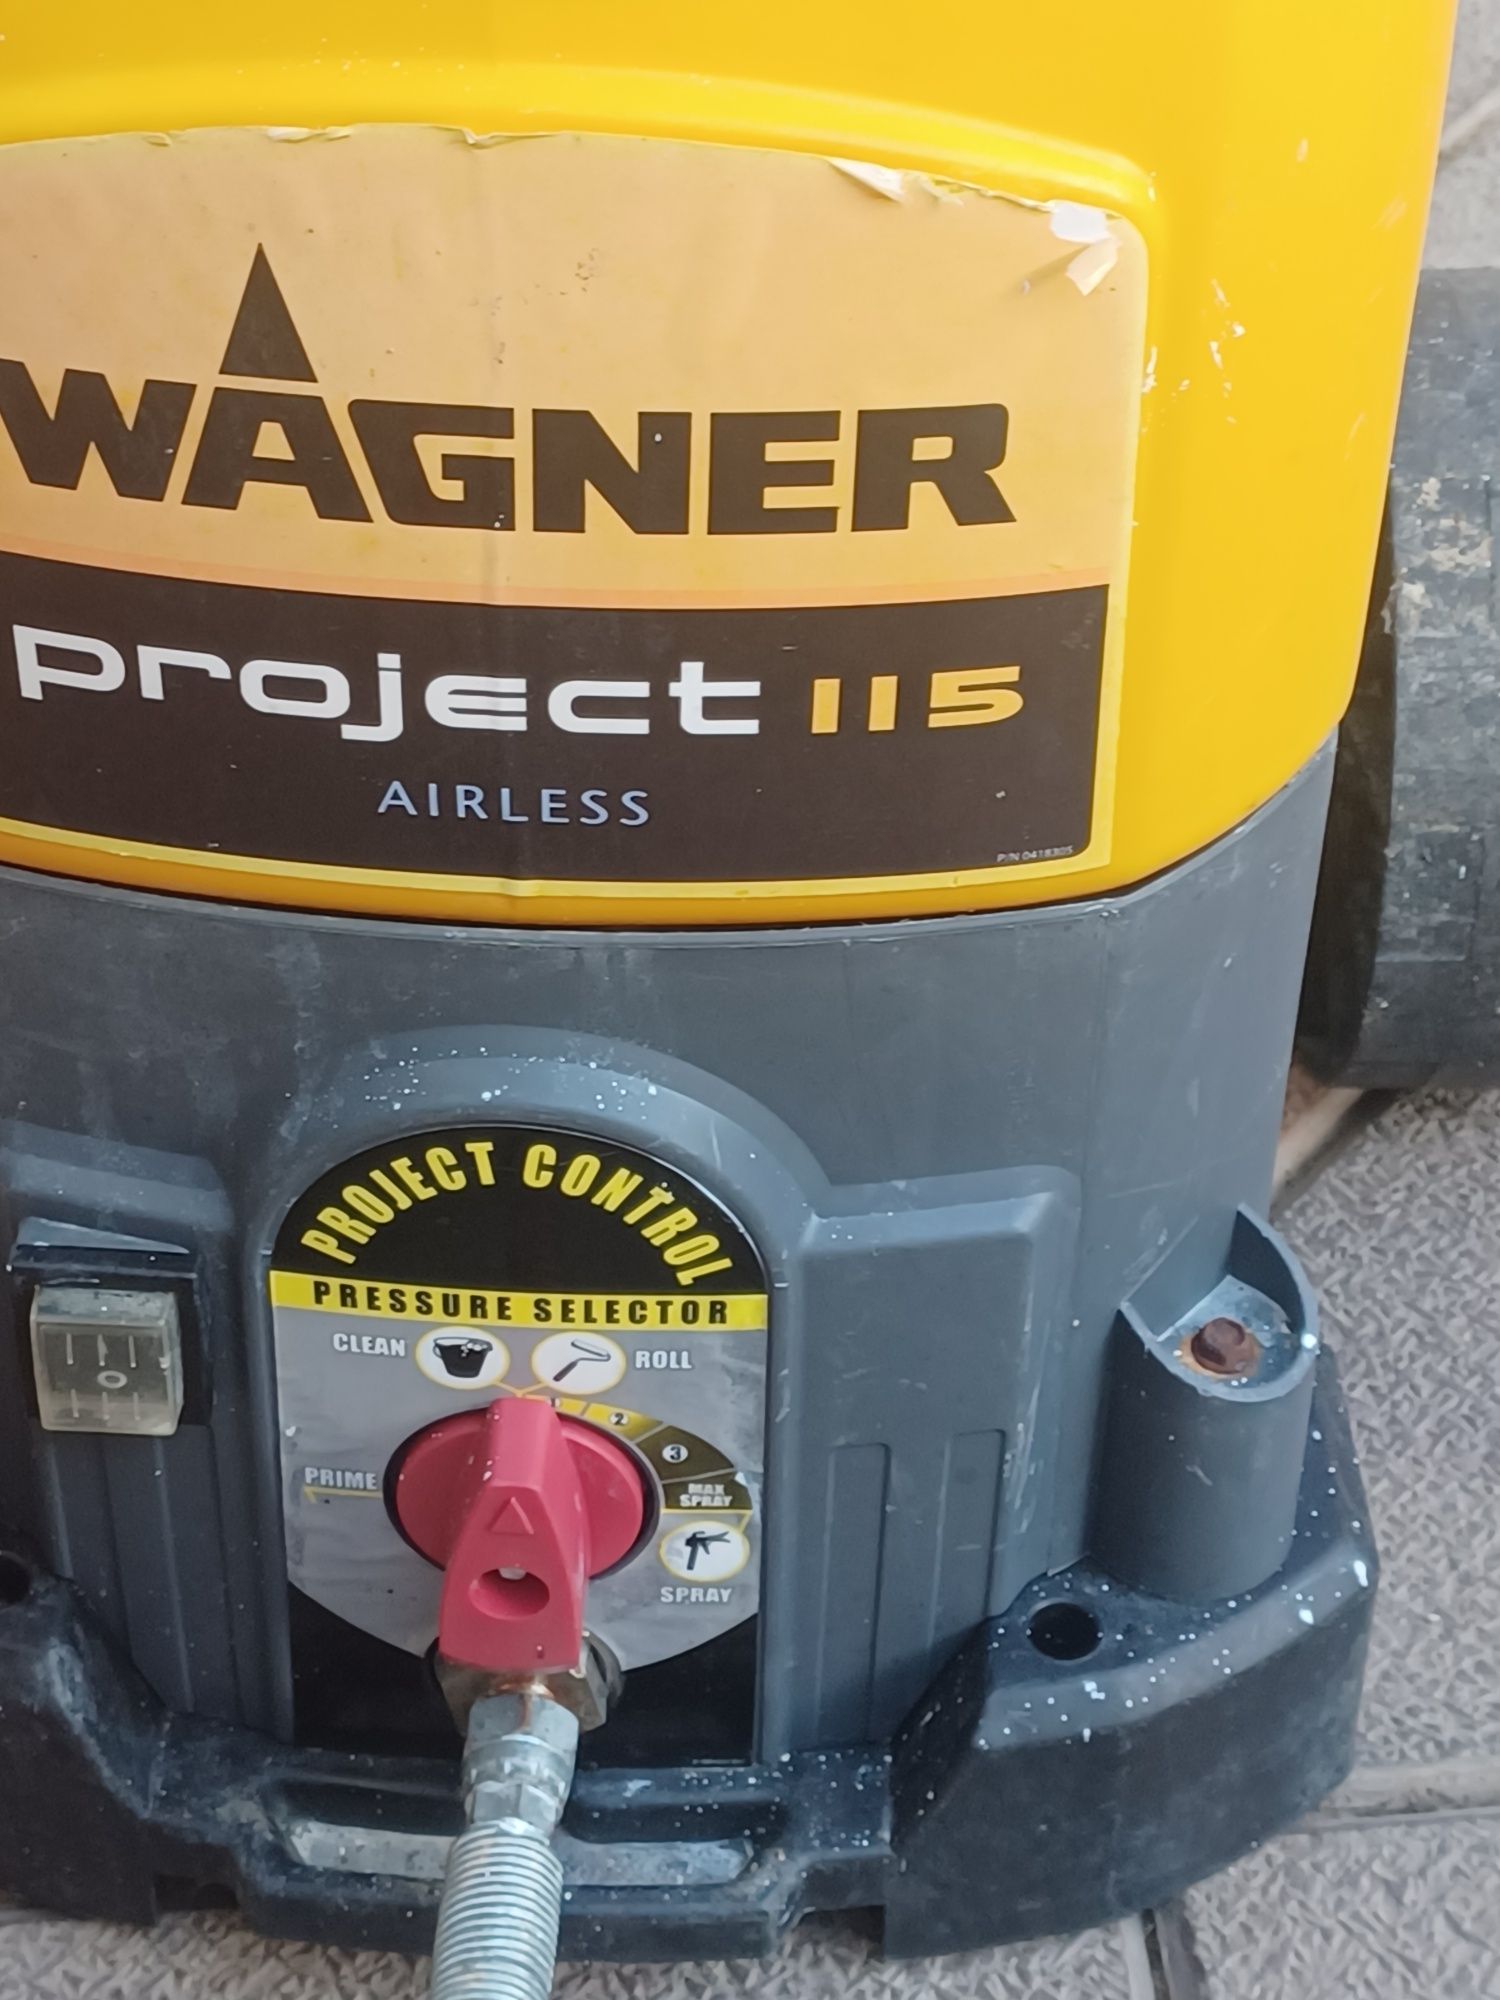 Pompa de lavabil  WAGNER PROJECT  115